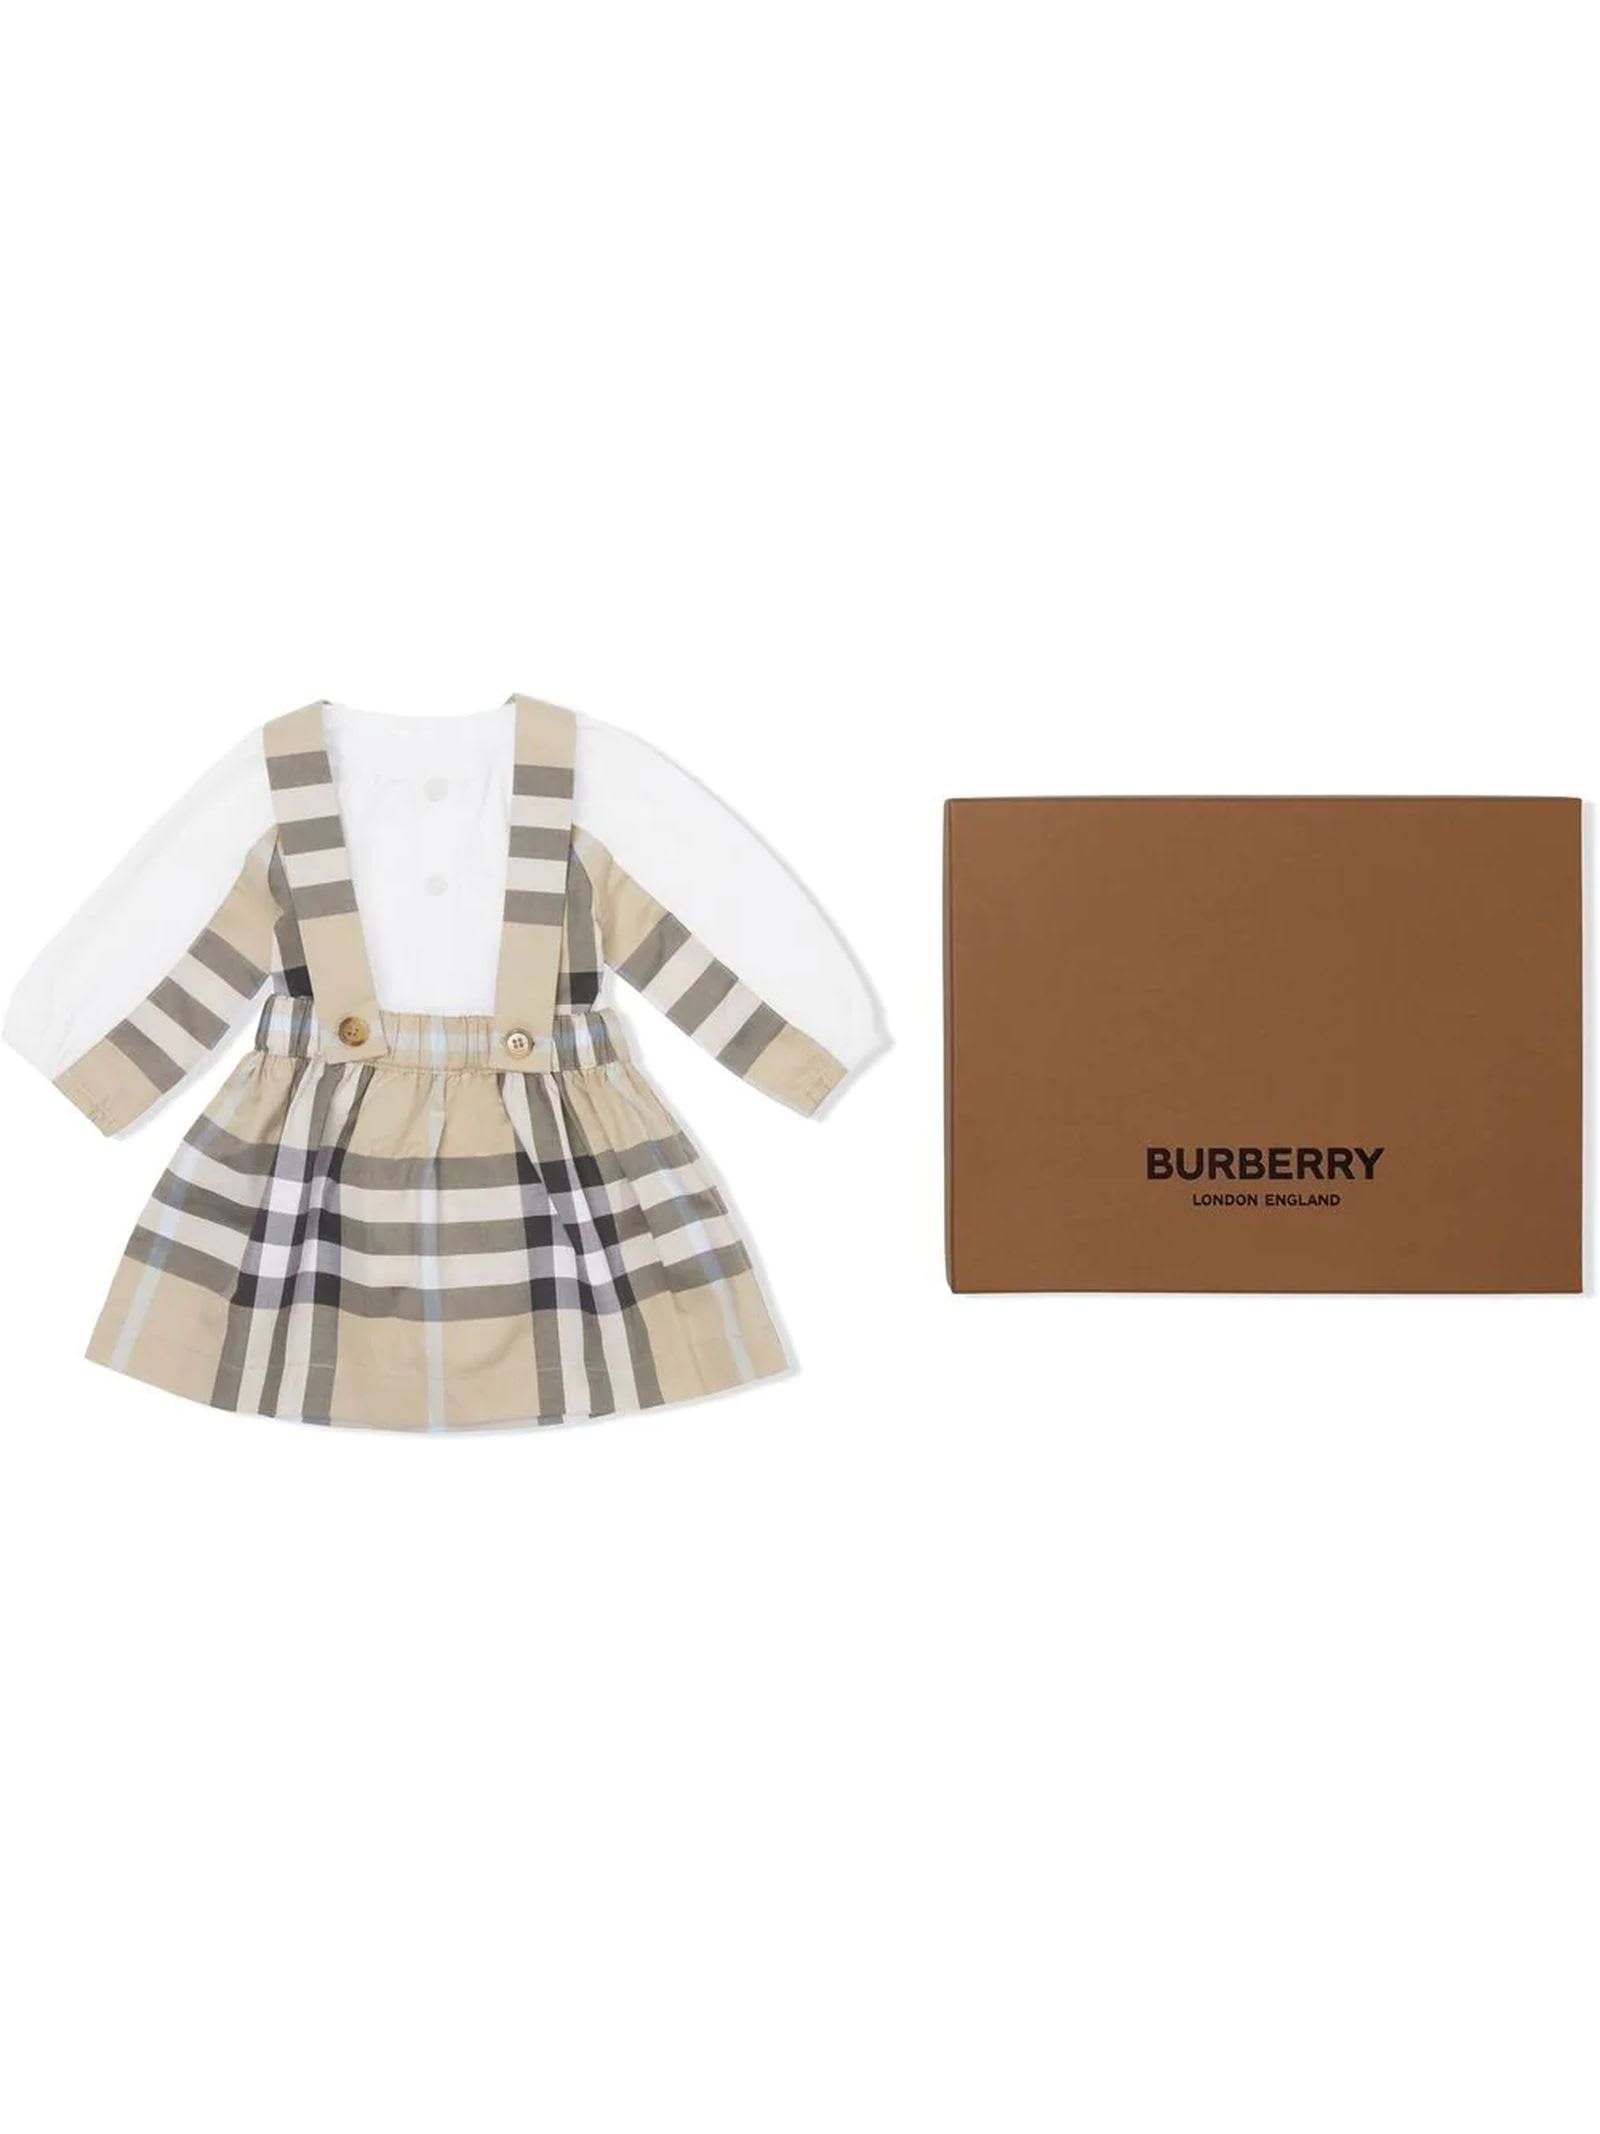 Burberry Beige Cotton Dress Set